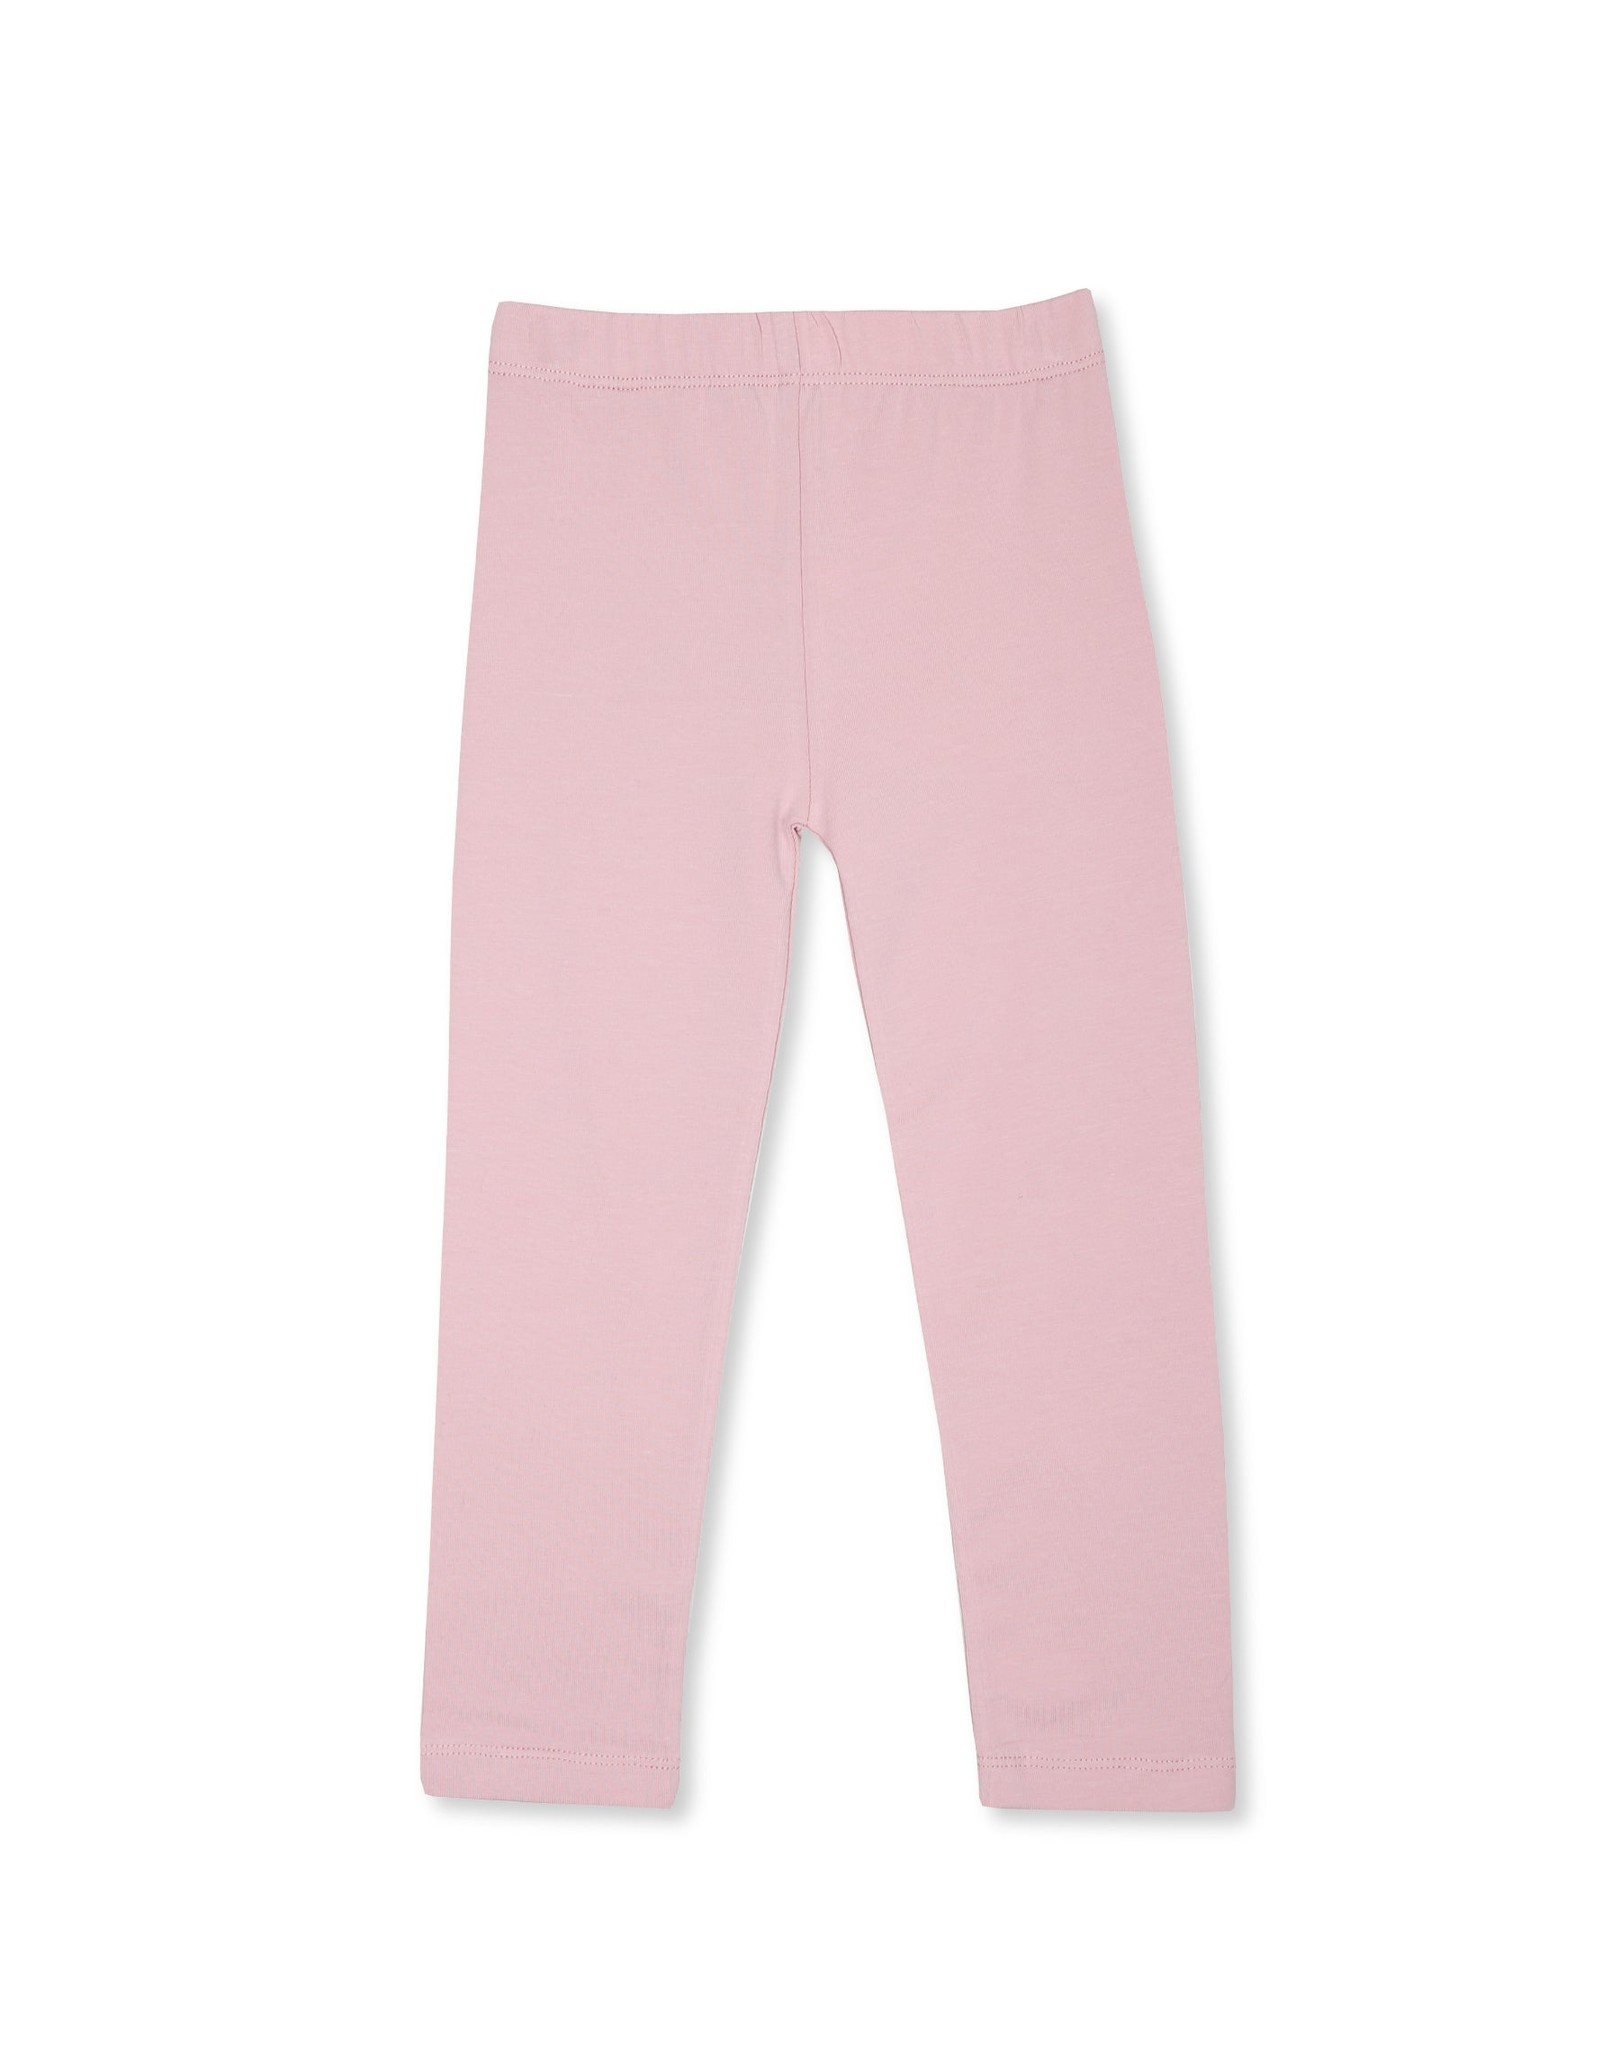 Oohvie Light Pink Leggings  Shop Feminine Products & Fashion